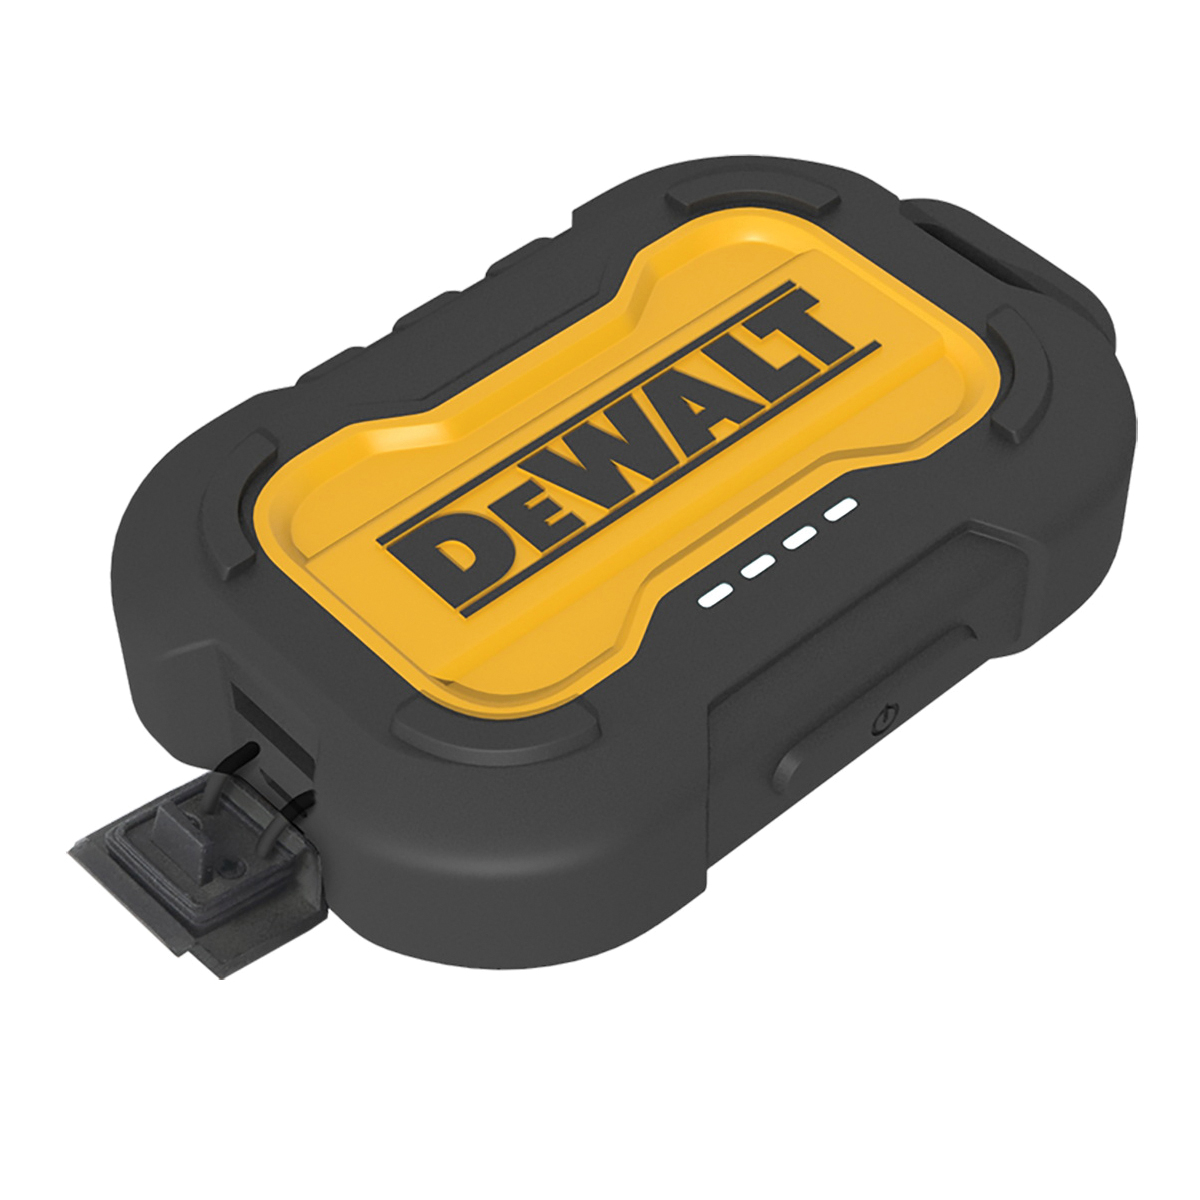 DeWALT 215 1643 DW2 Power Bank, 10,000 mAh Capacity, 2-USB Port, Black